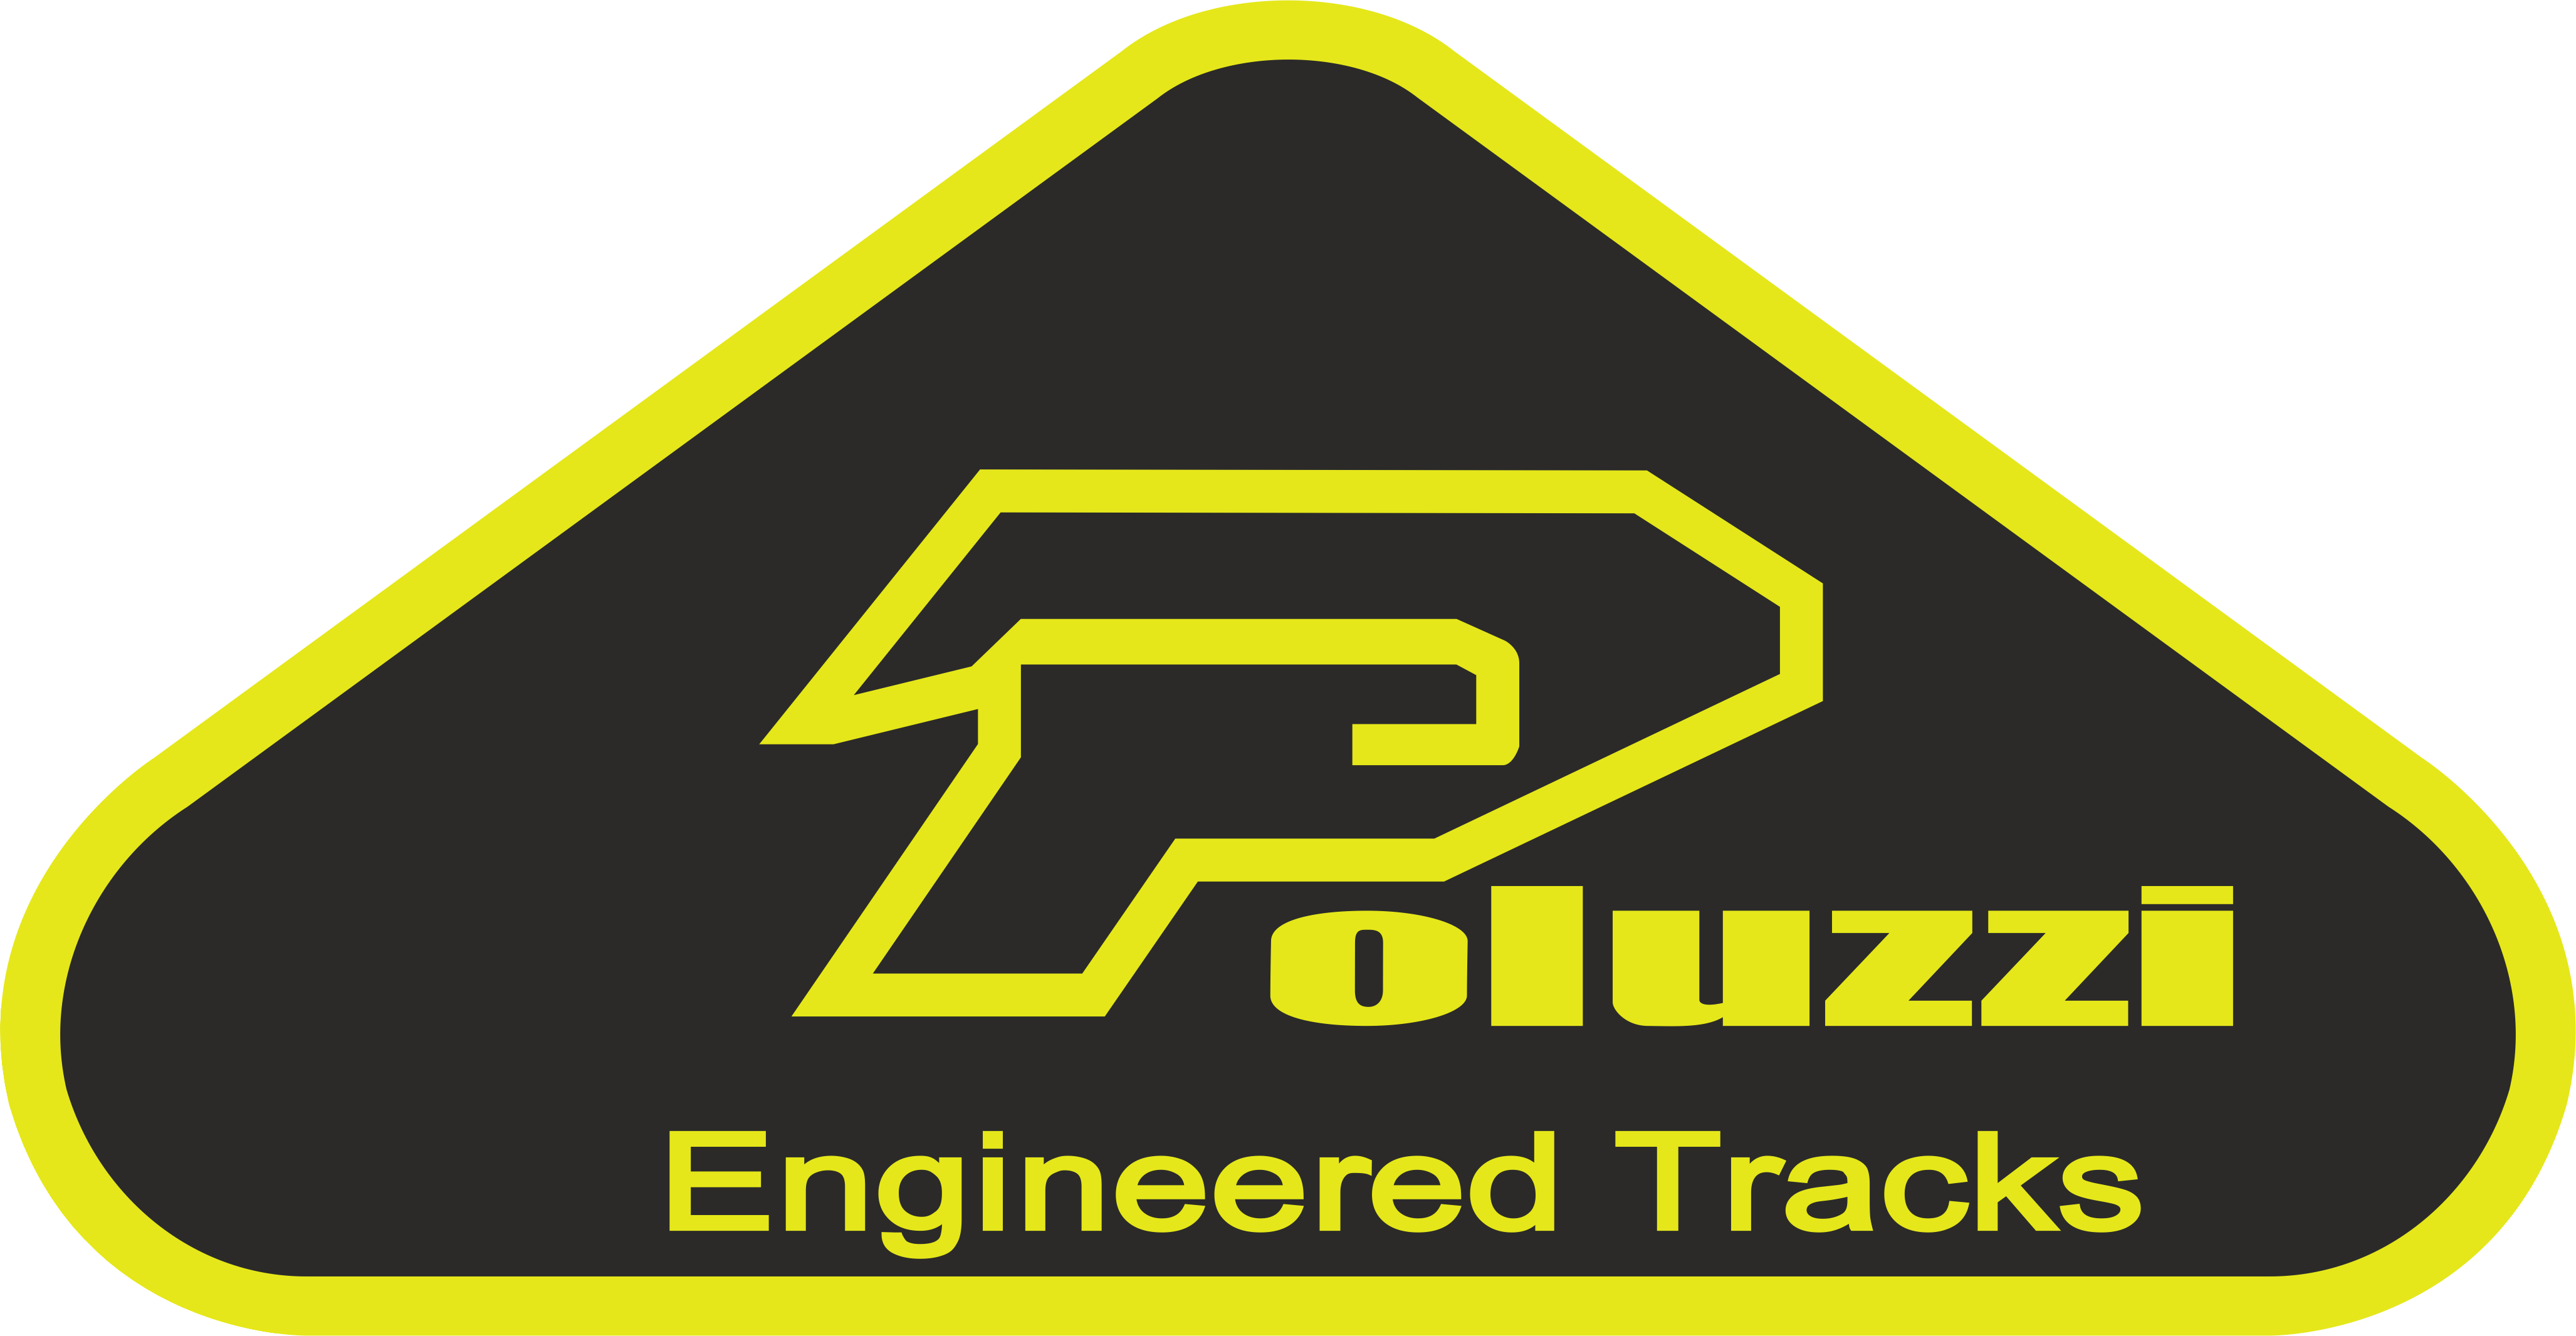 Poluzzi. Poluzzi track System. Dsign Trak System. He tracks